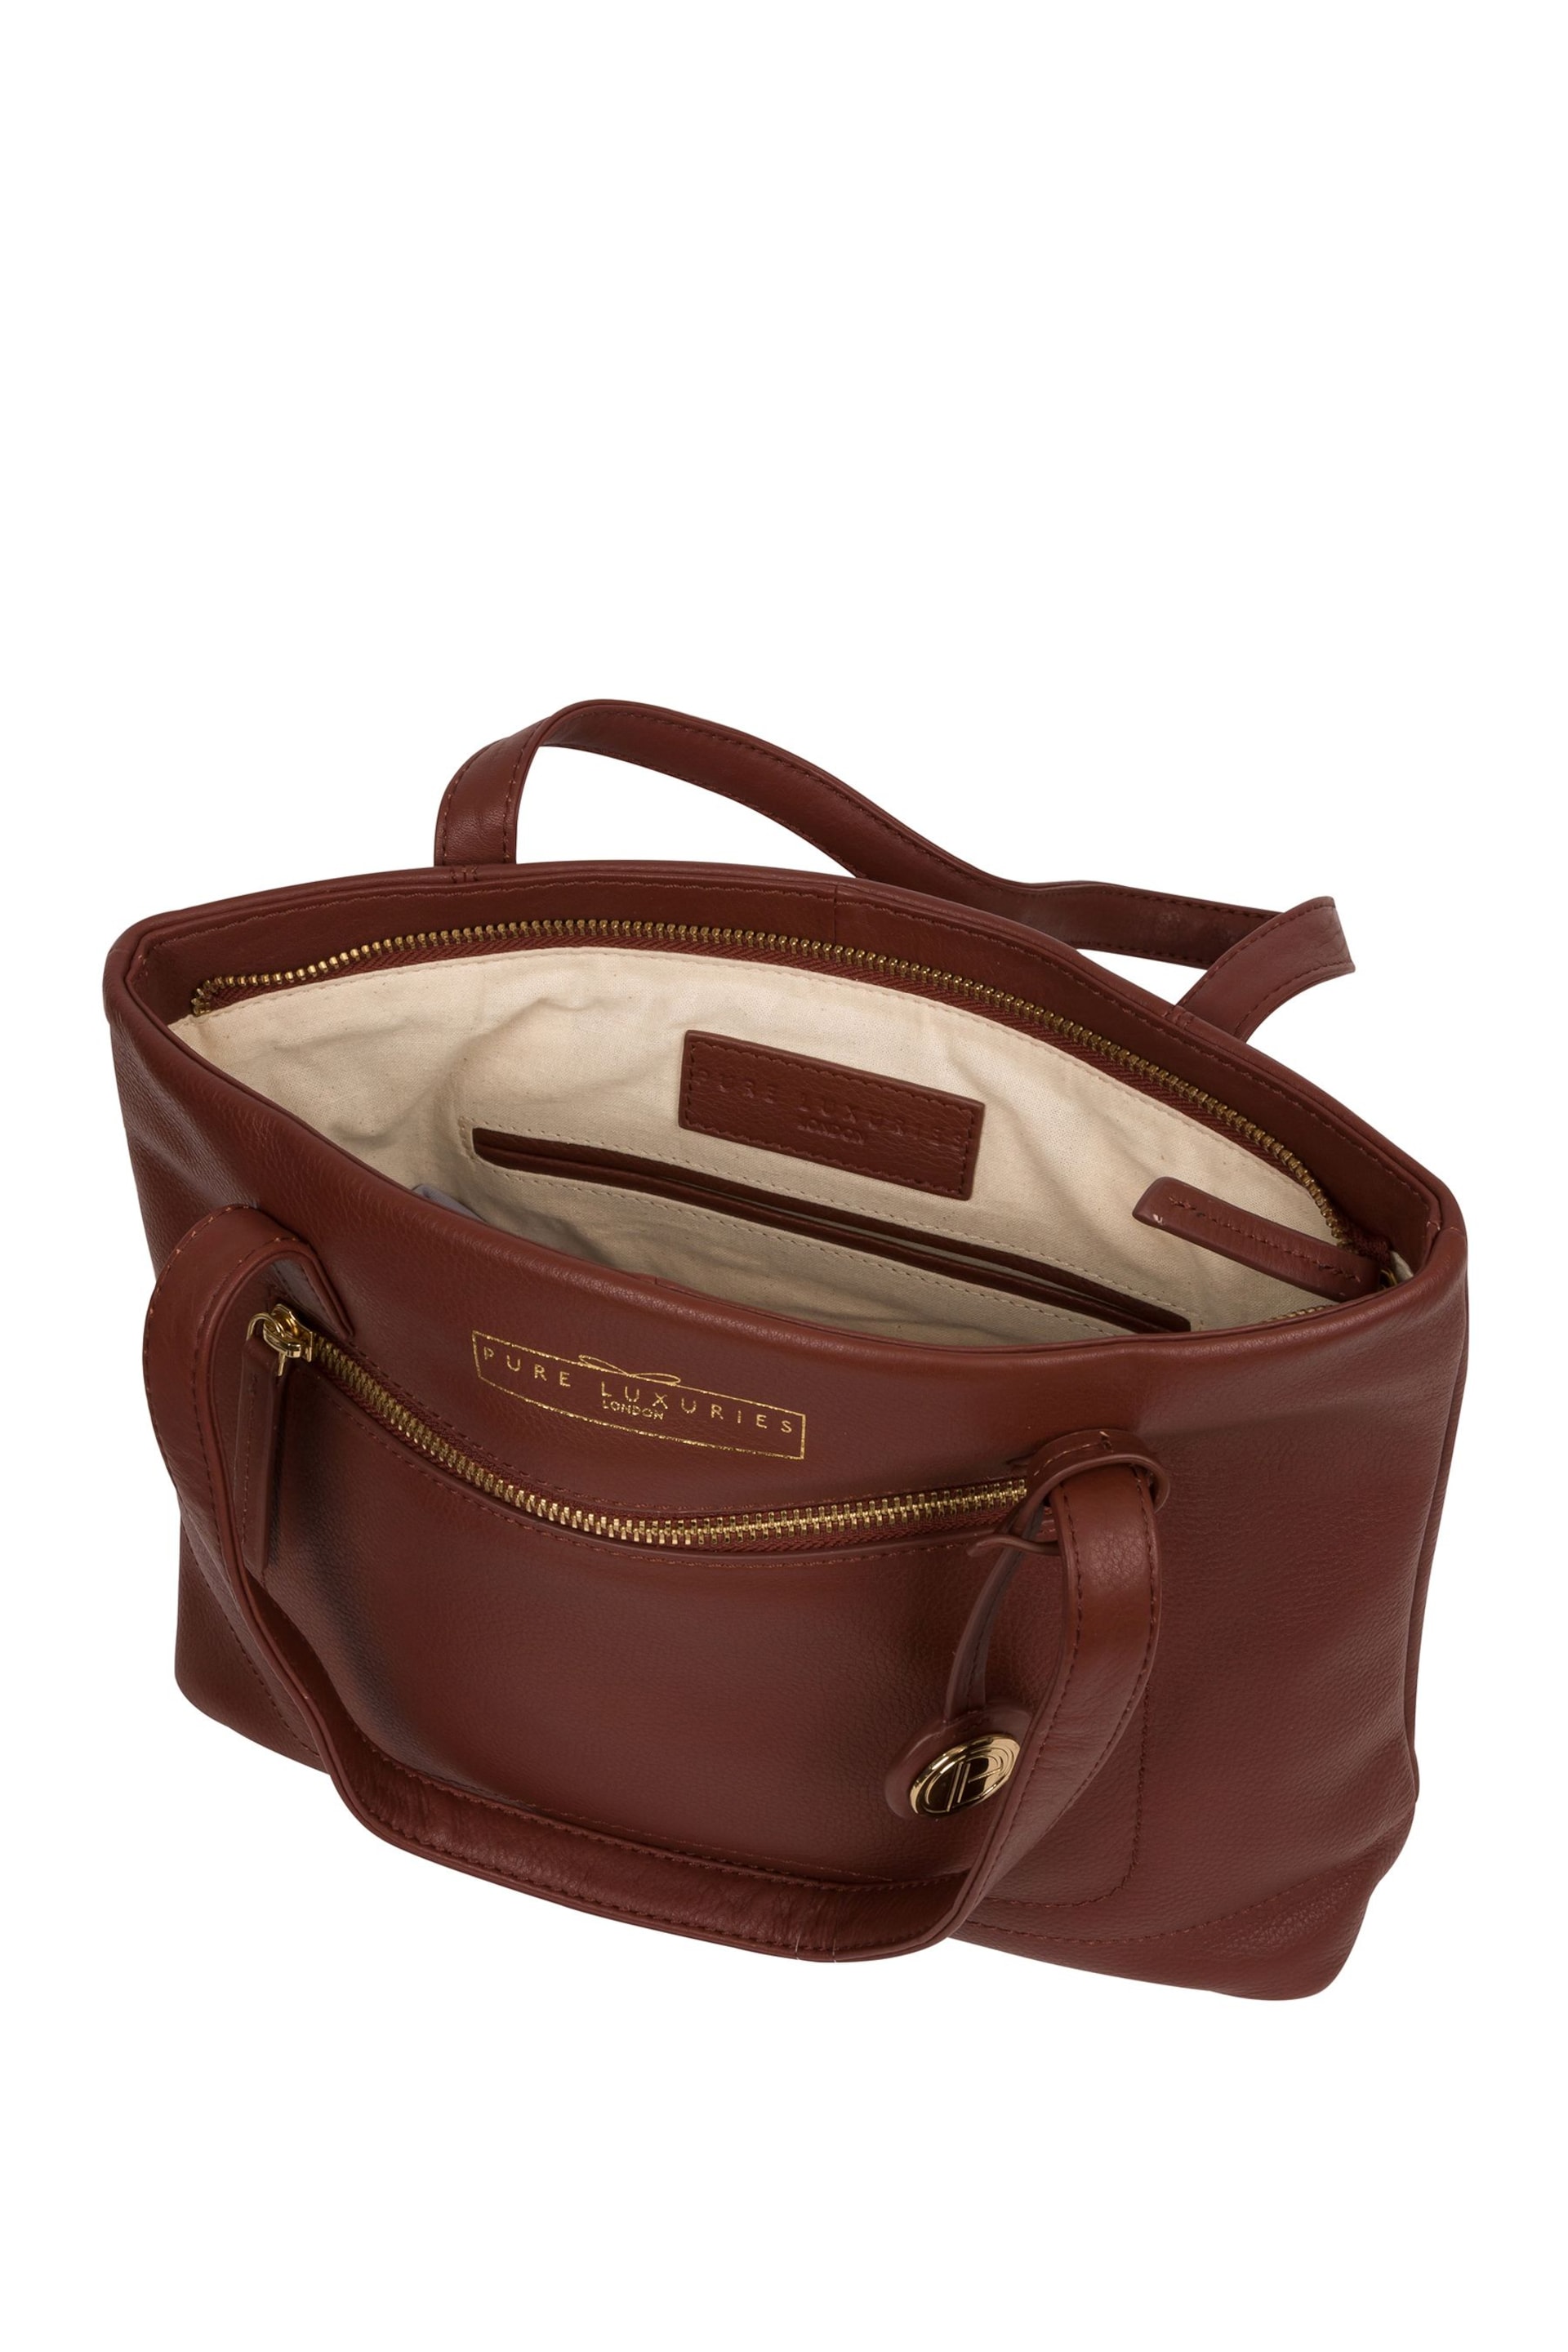 Pure Luxuries London Adley Leather Handbag - Image 4 of 7